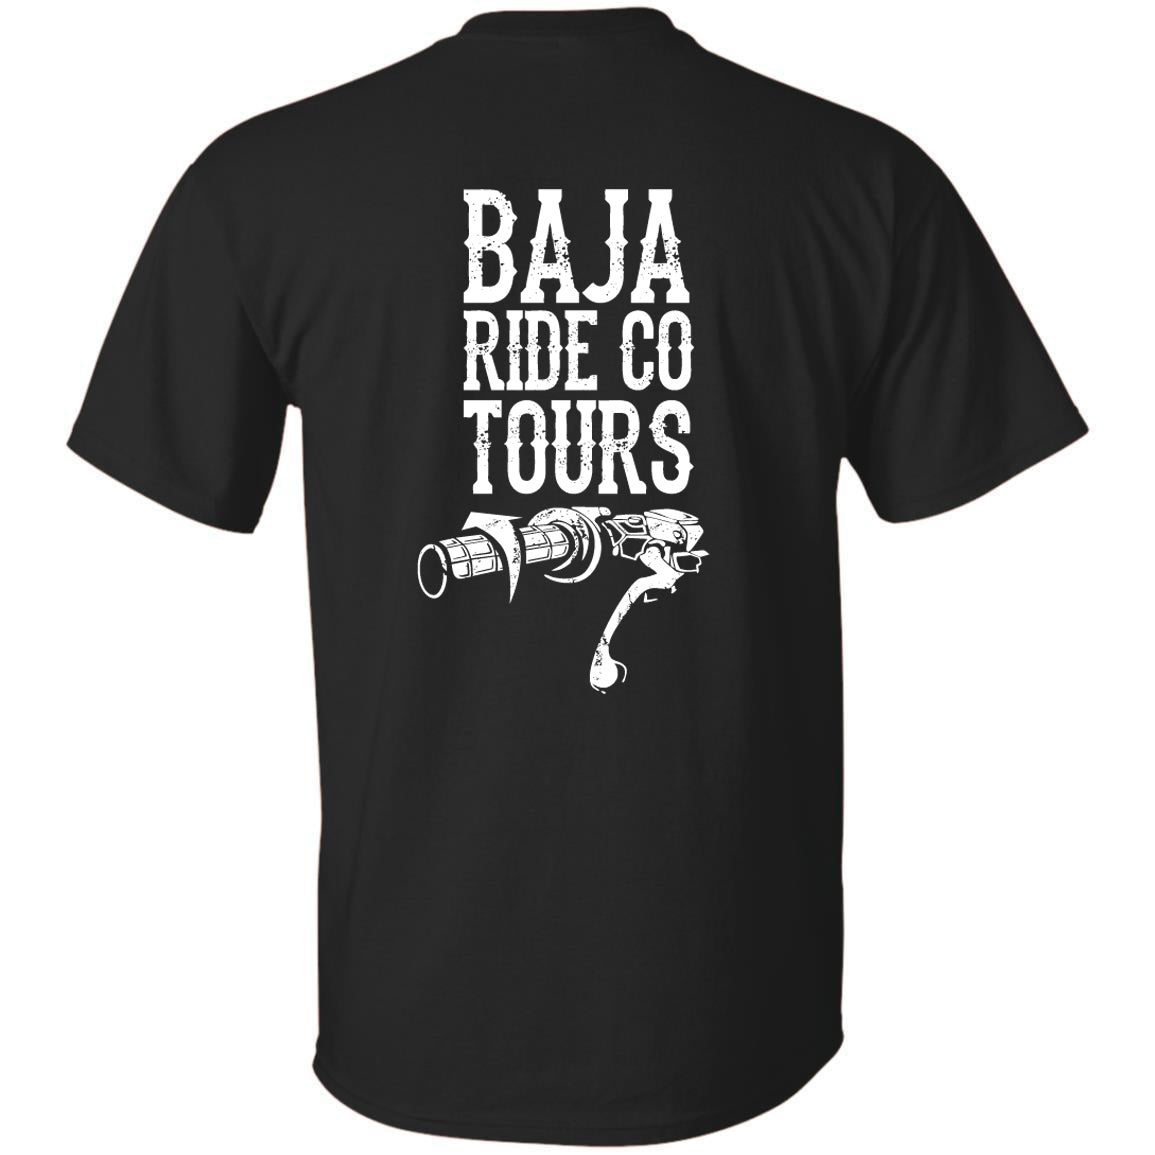 Baja "Throttle" T-Shirt